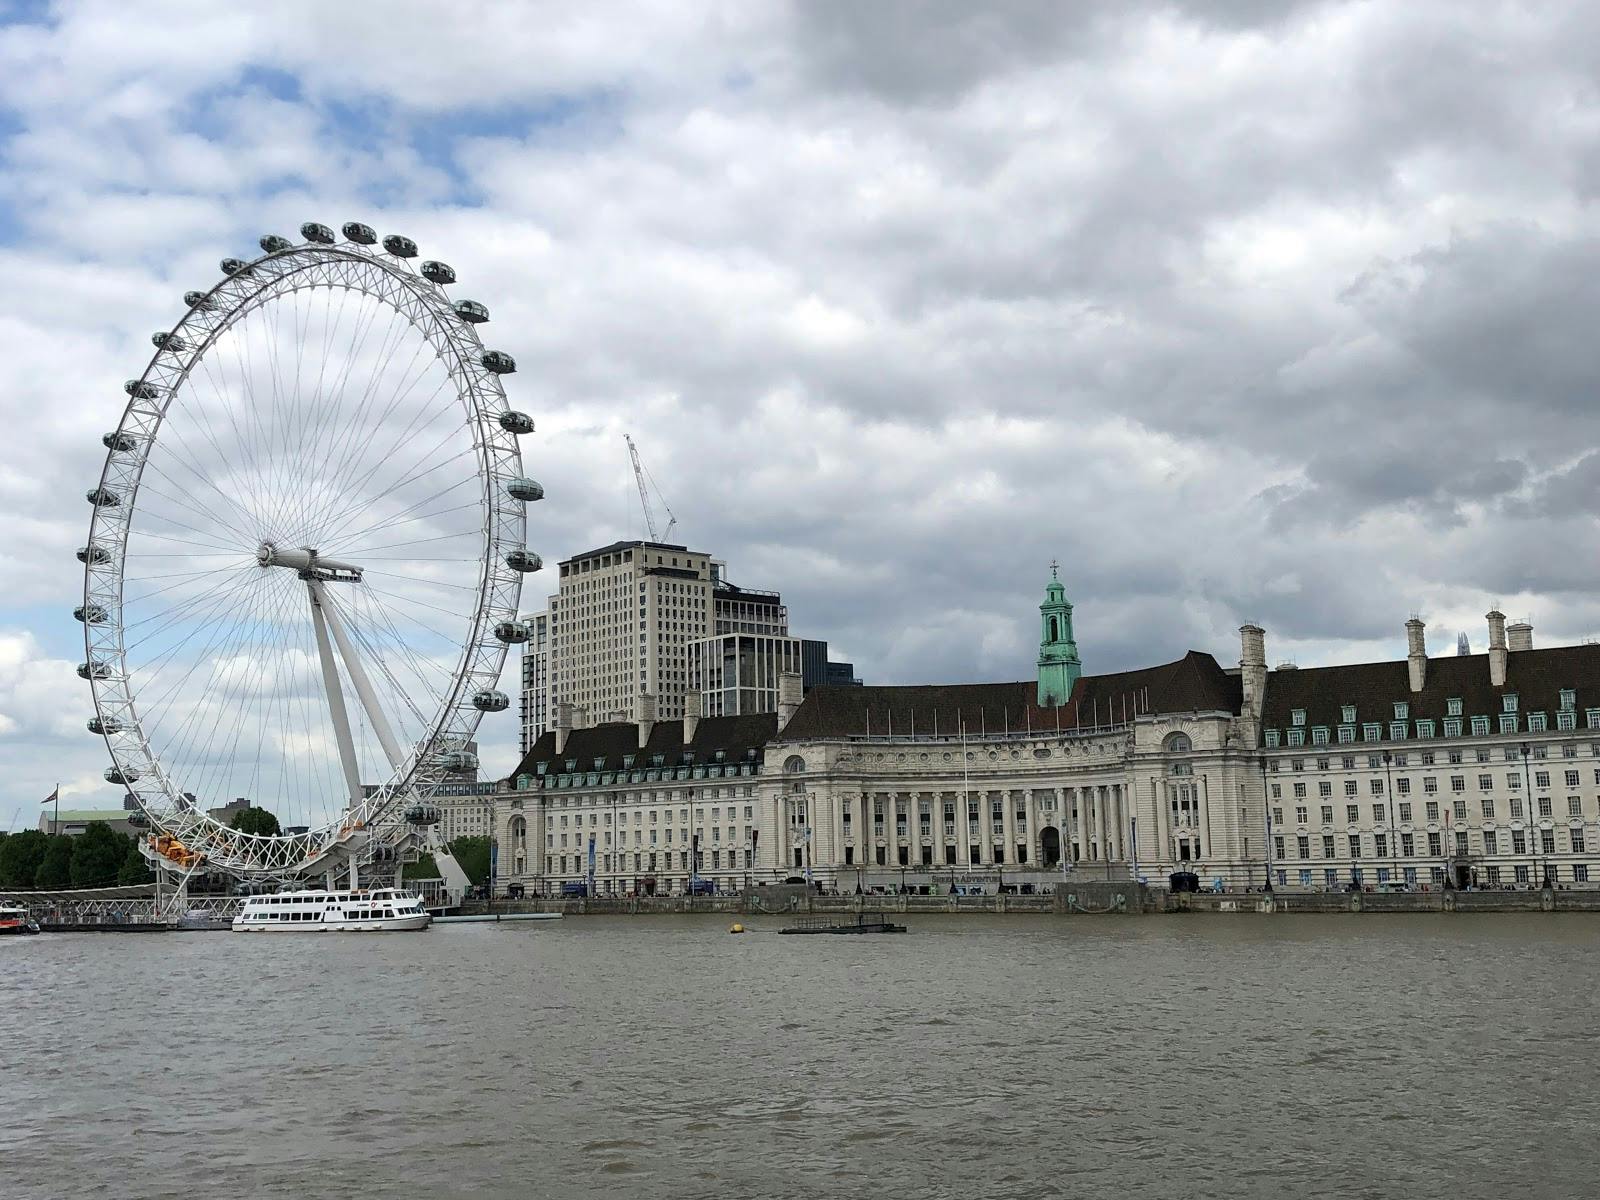 Image - London Eye